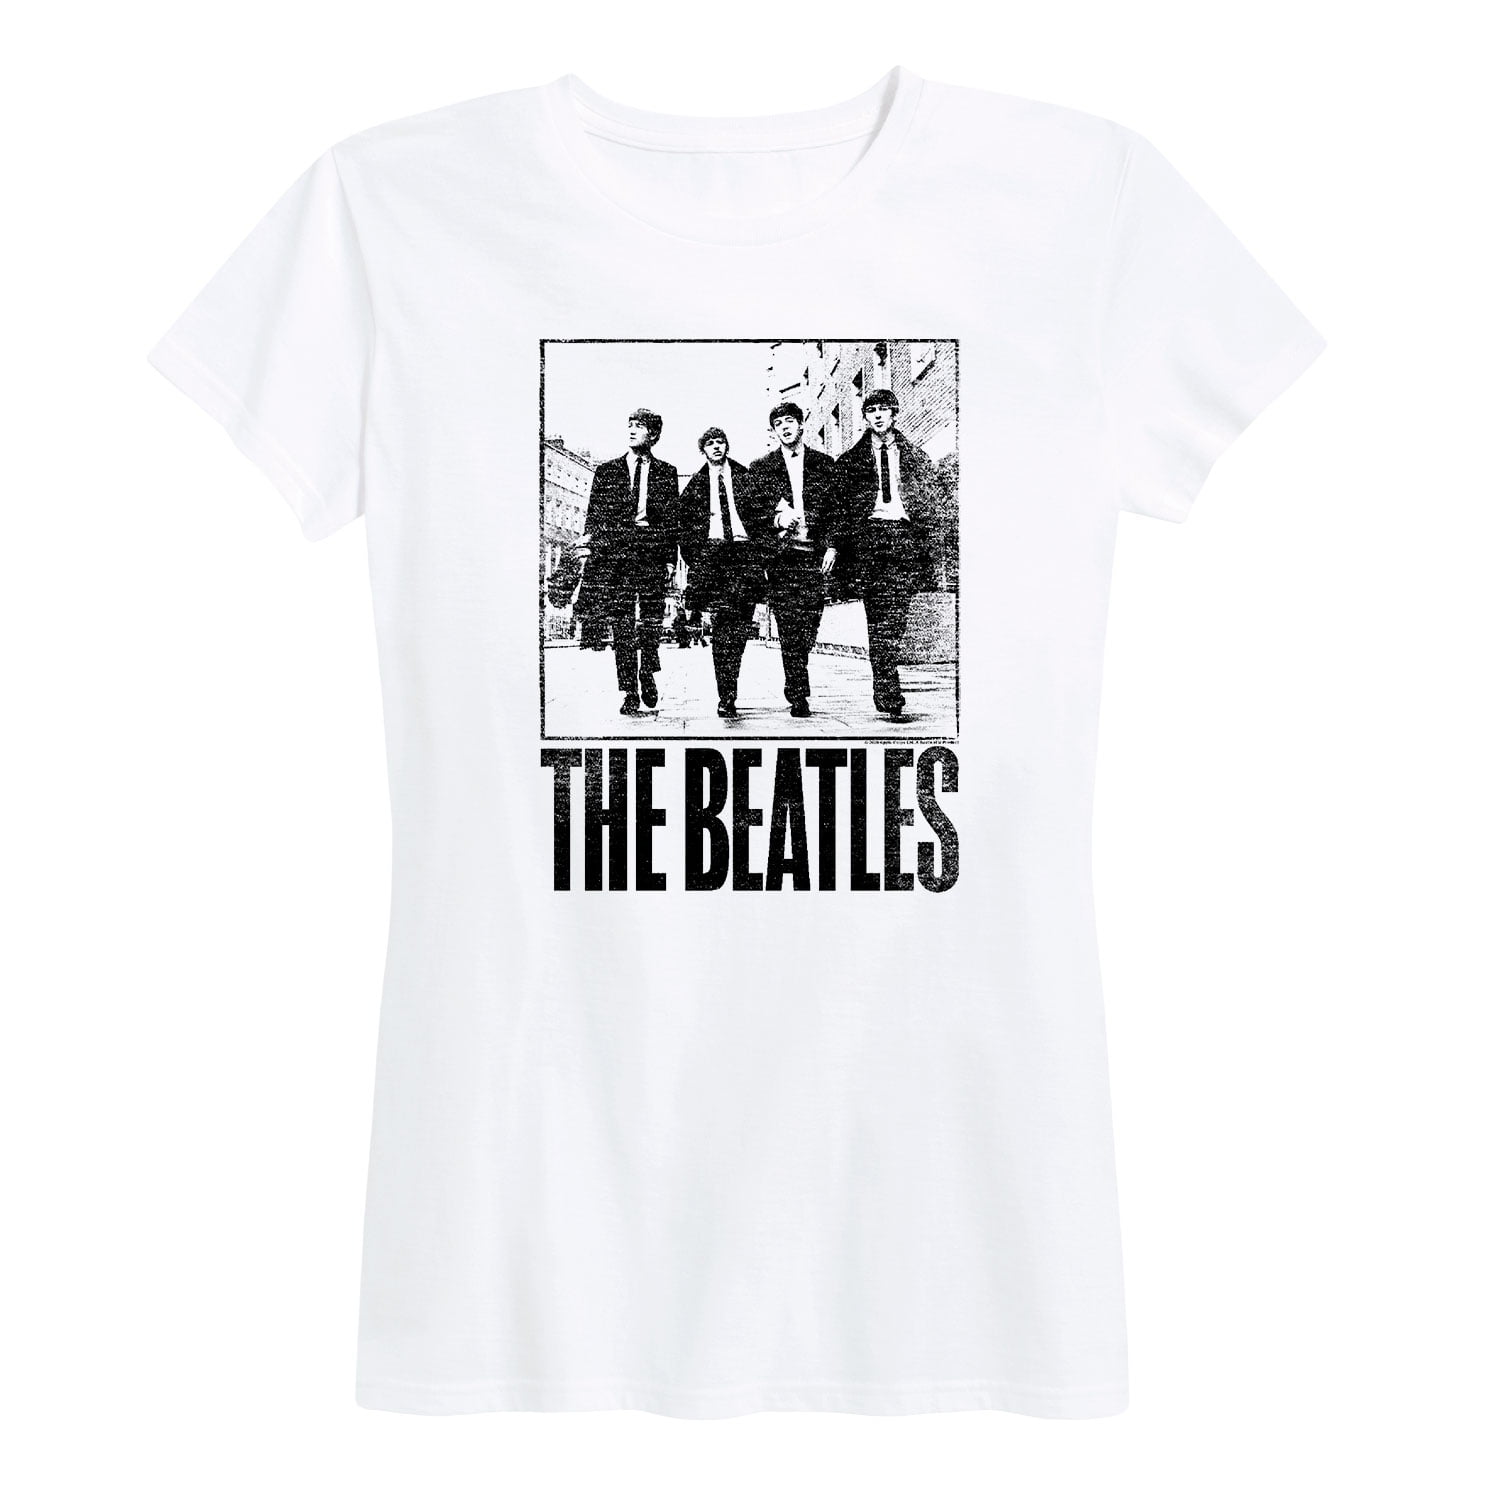 The Beatles Woman short sleeve Black-White Tshirt K137-W